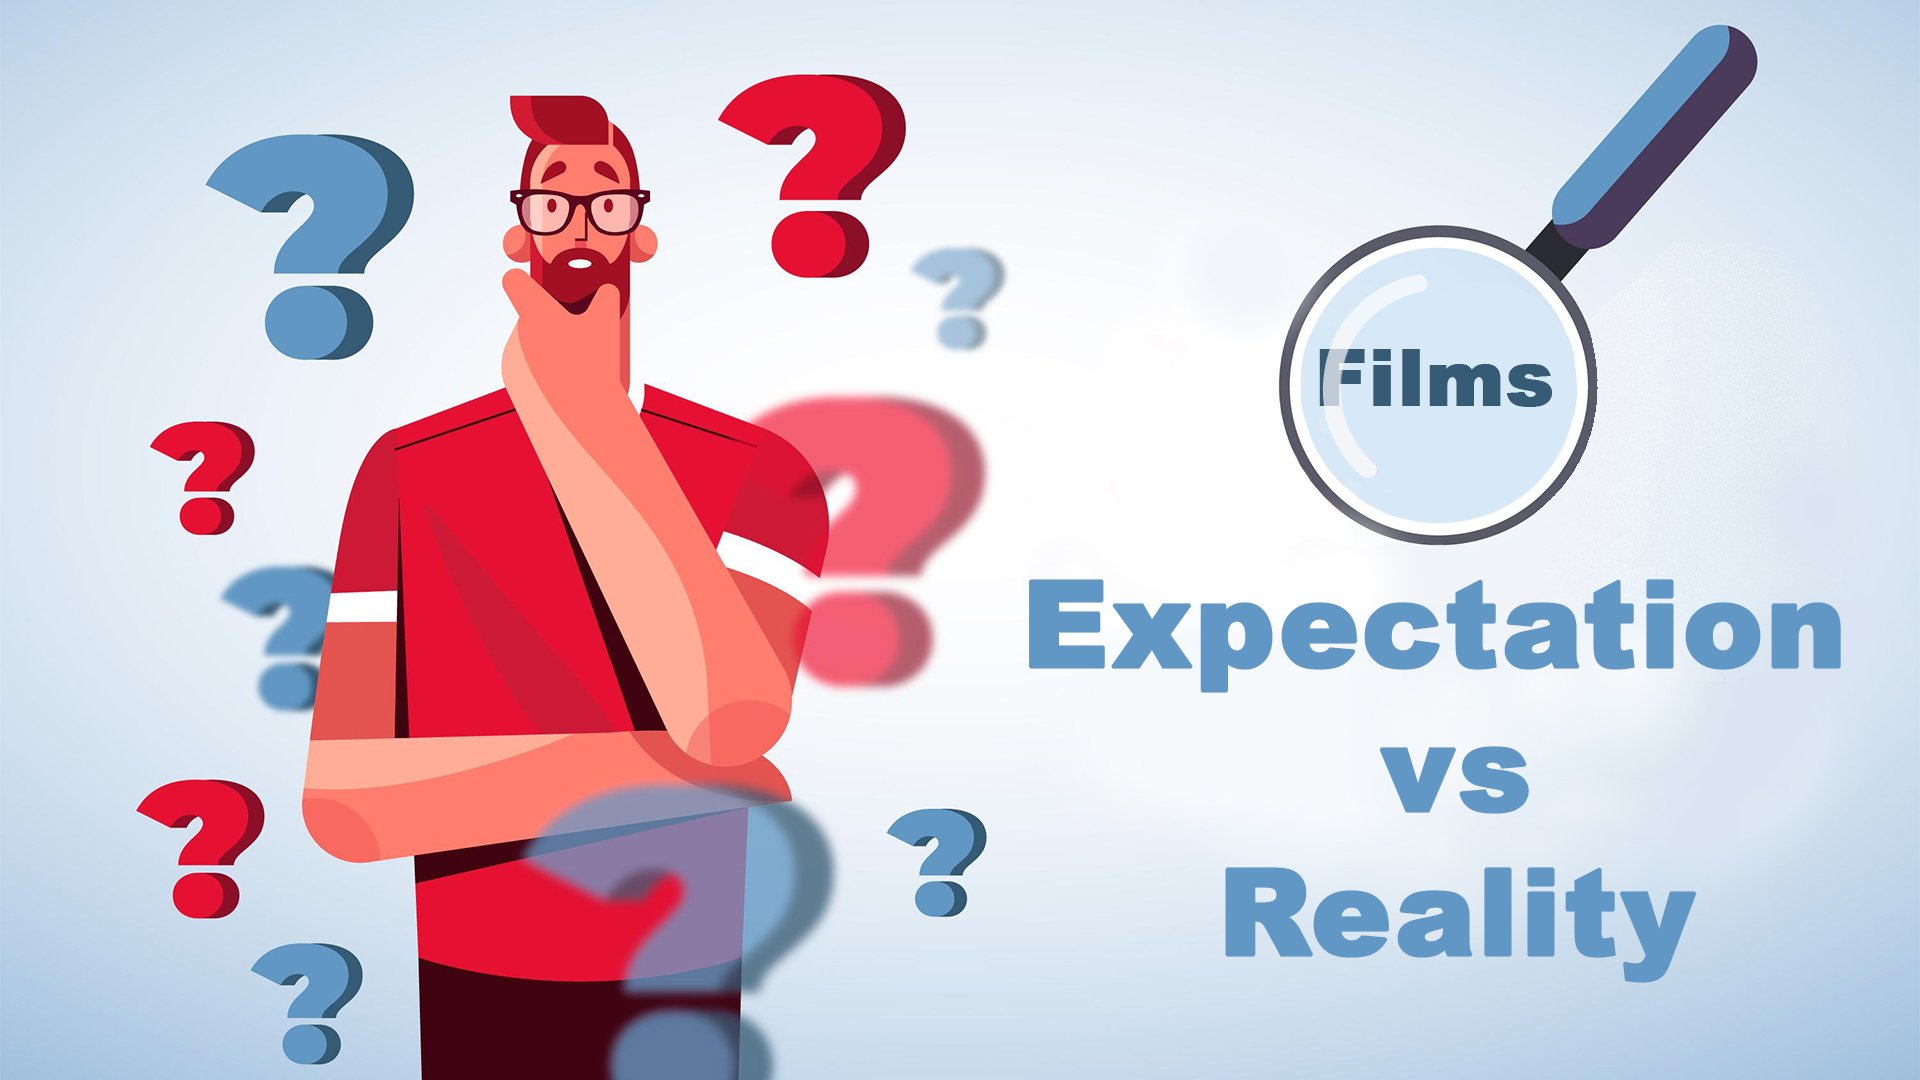 Films: Expectations vs. Reality